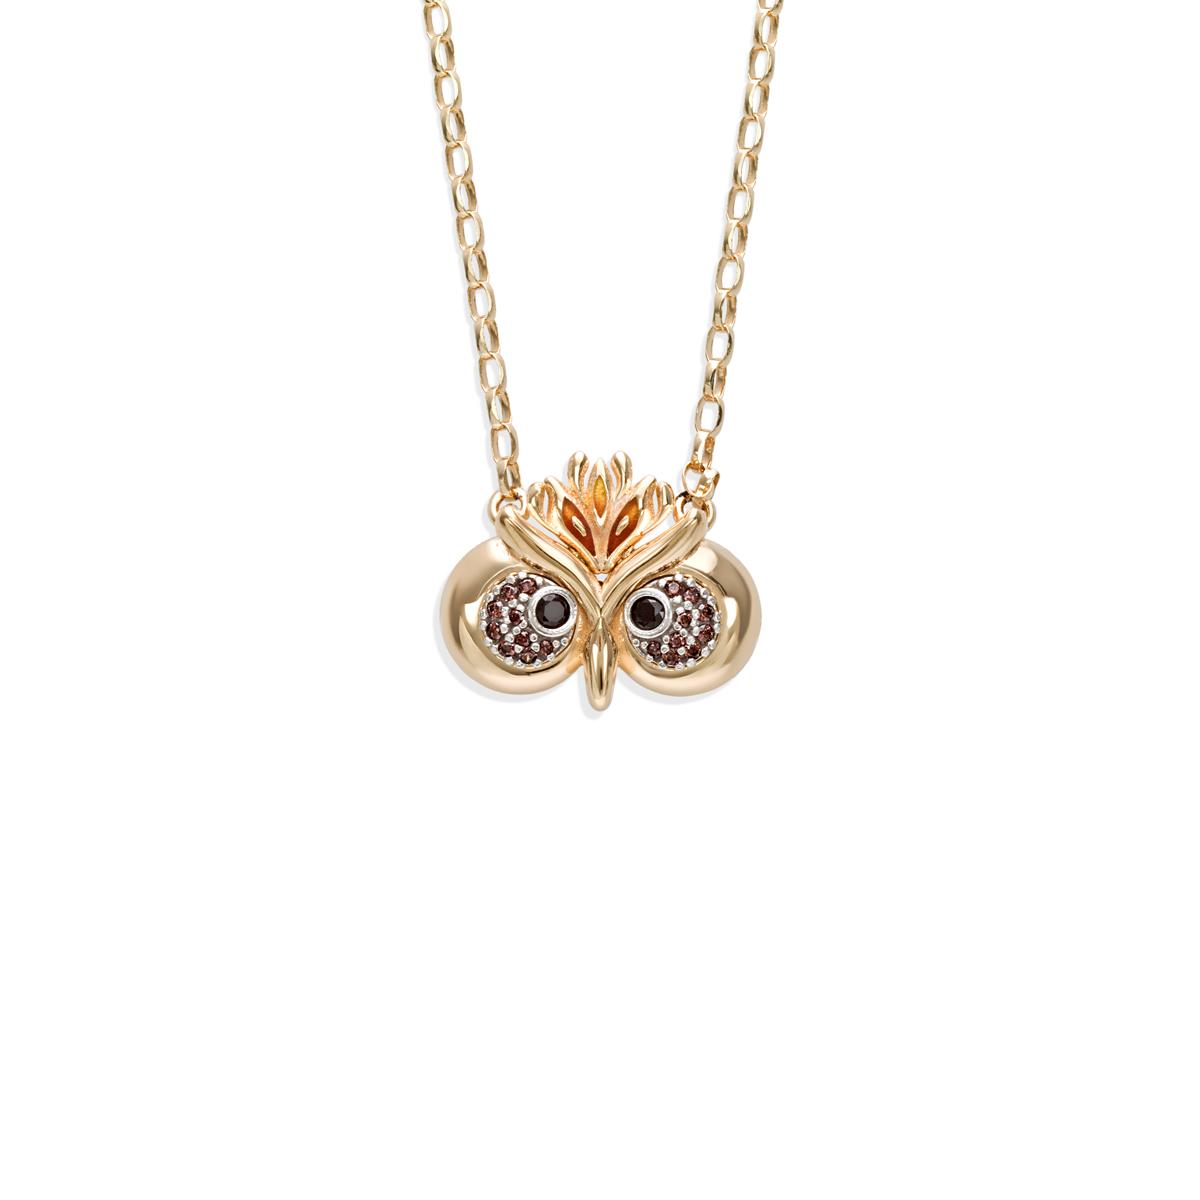 Silver enameled owl pendant necklace